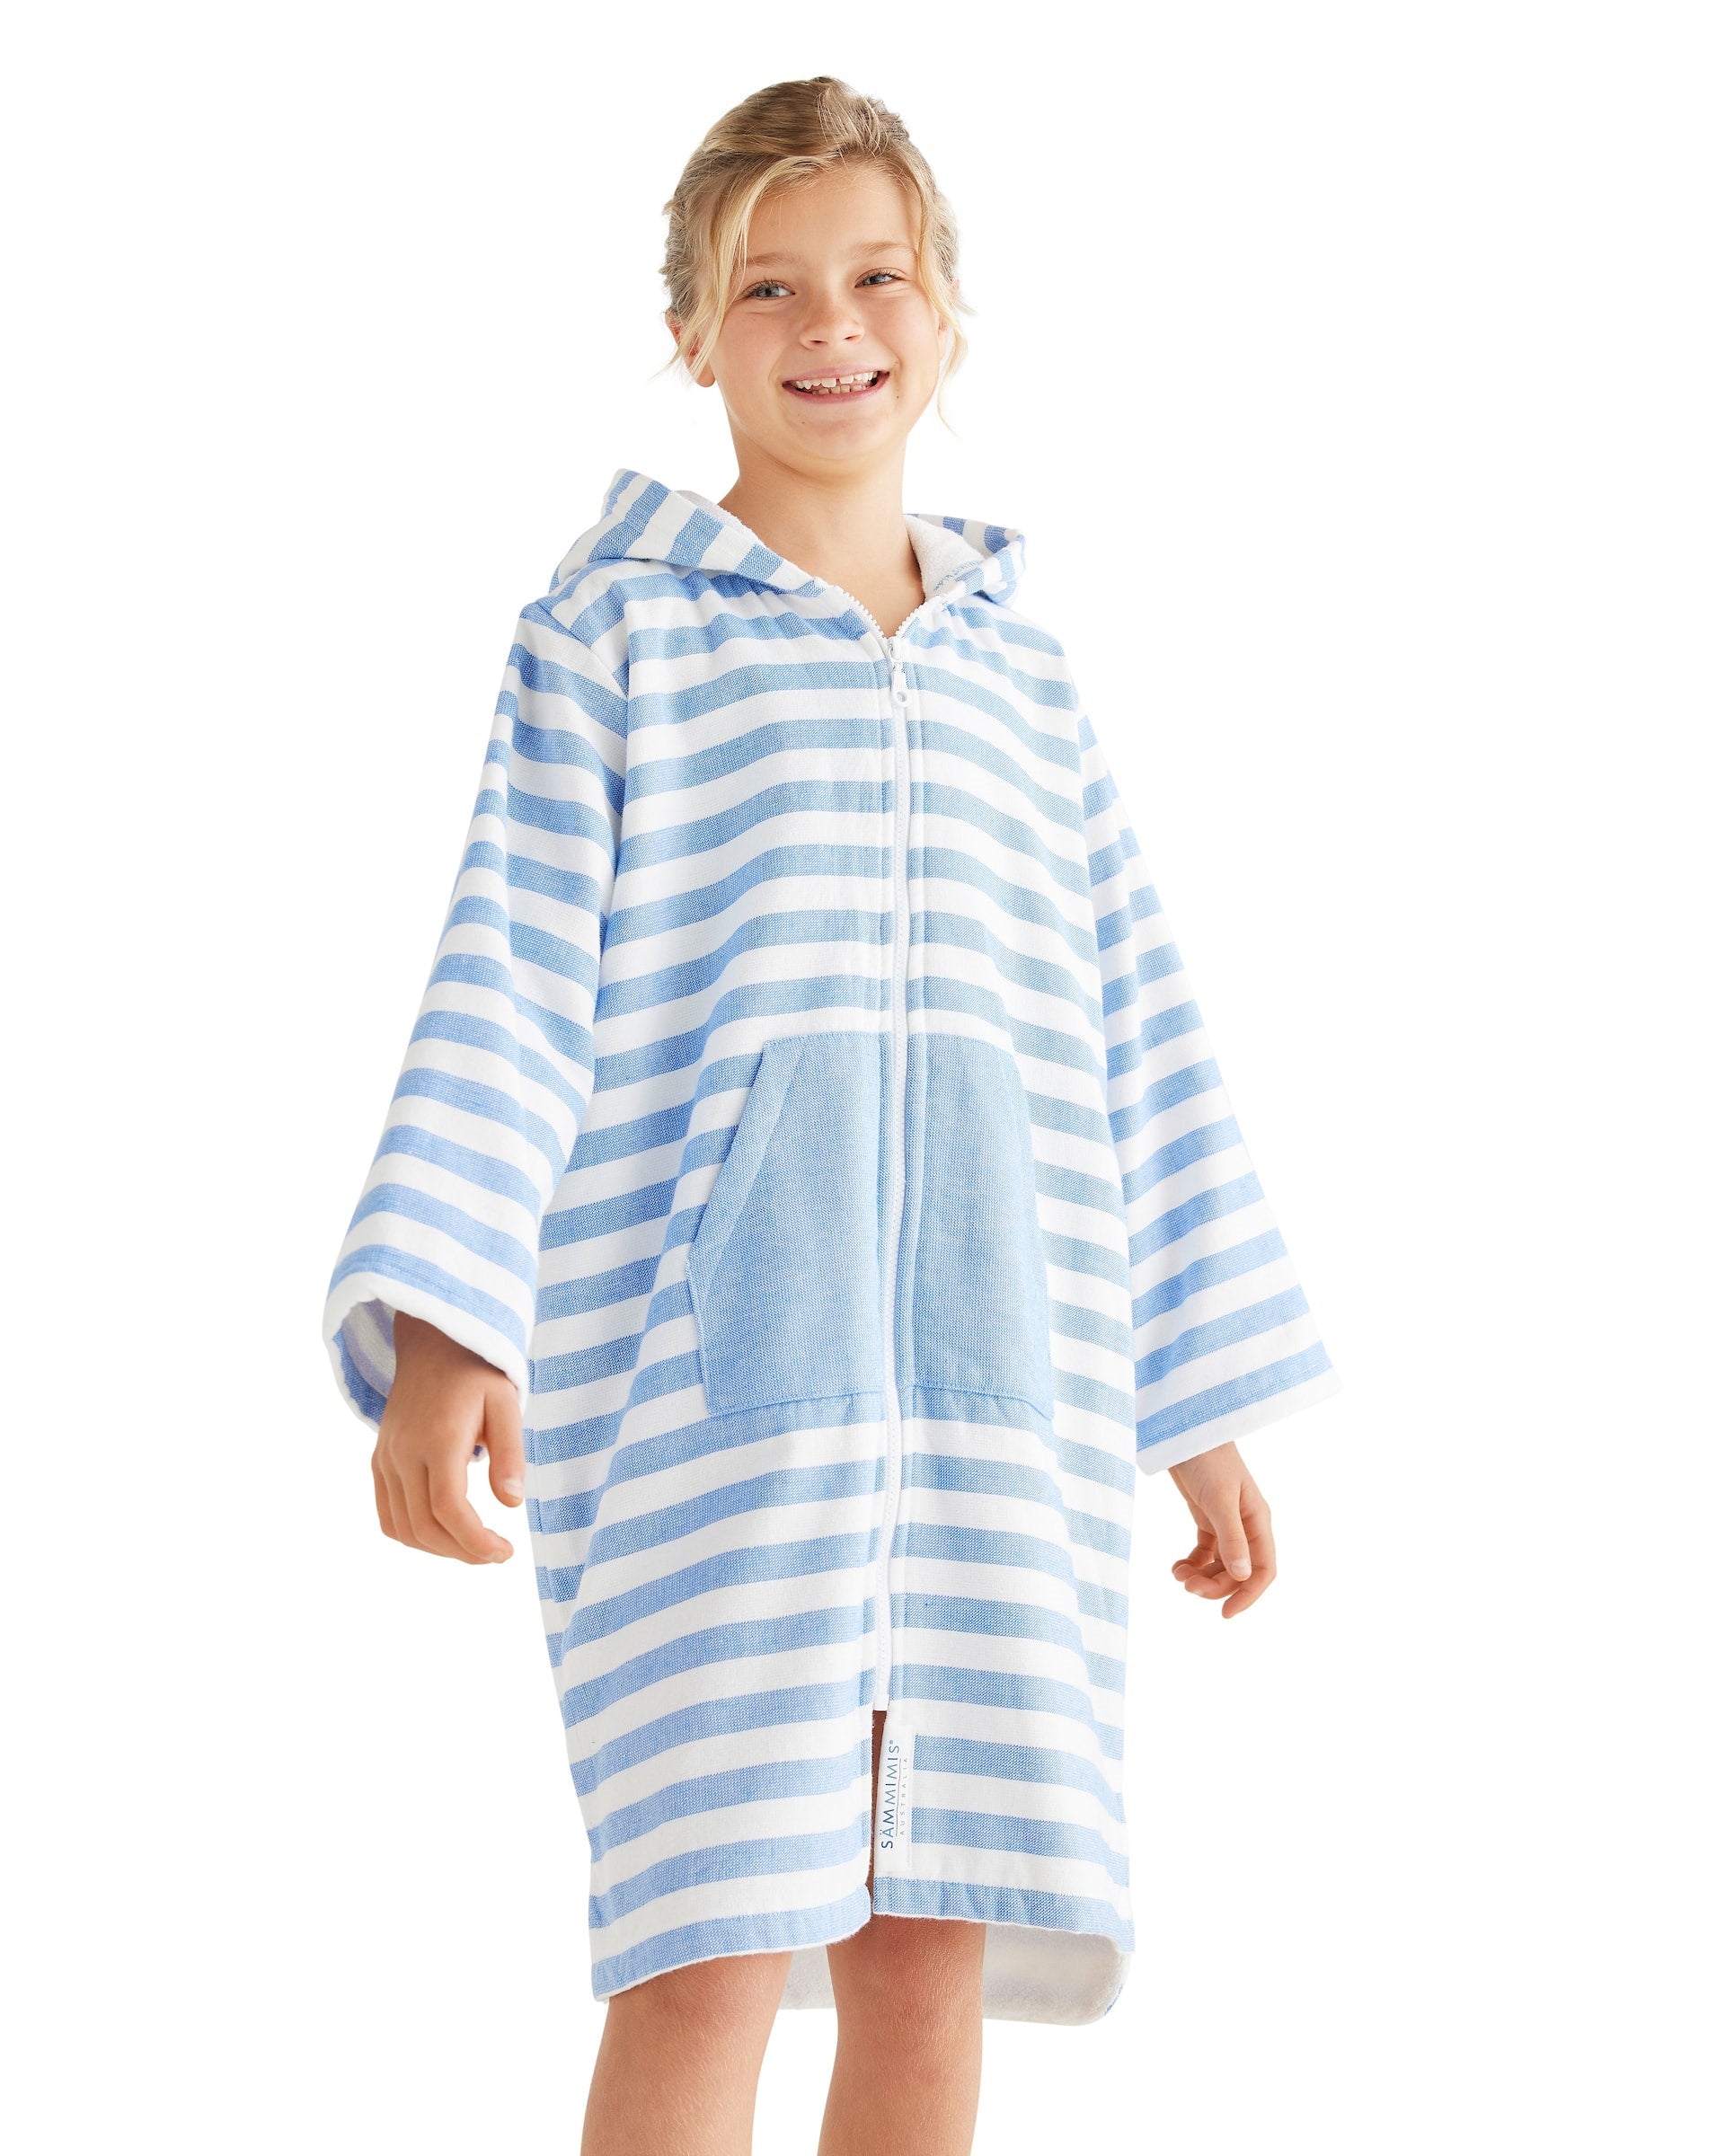 MENORCA Kids Terry Hooded Towel: Royal Blue/White